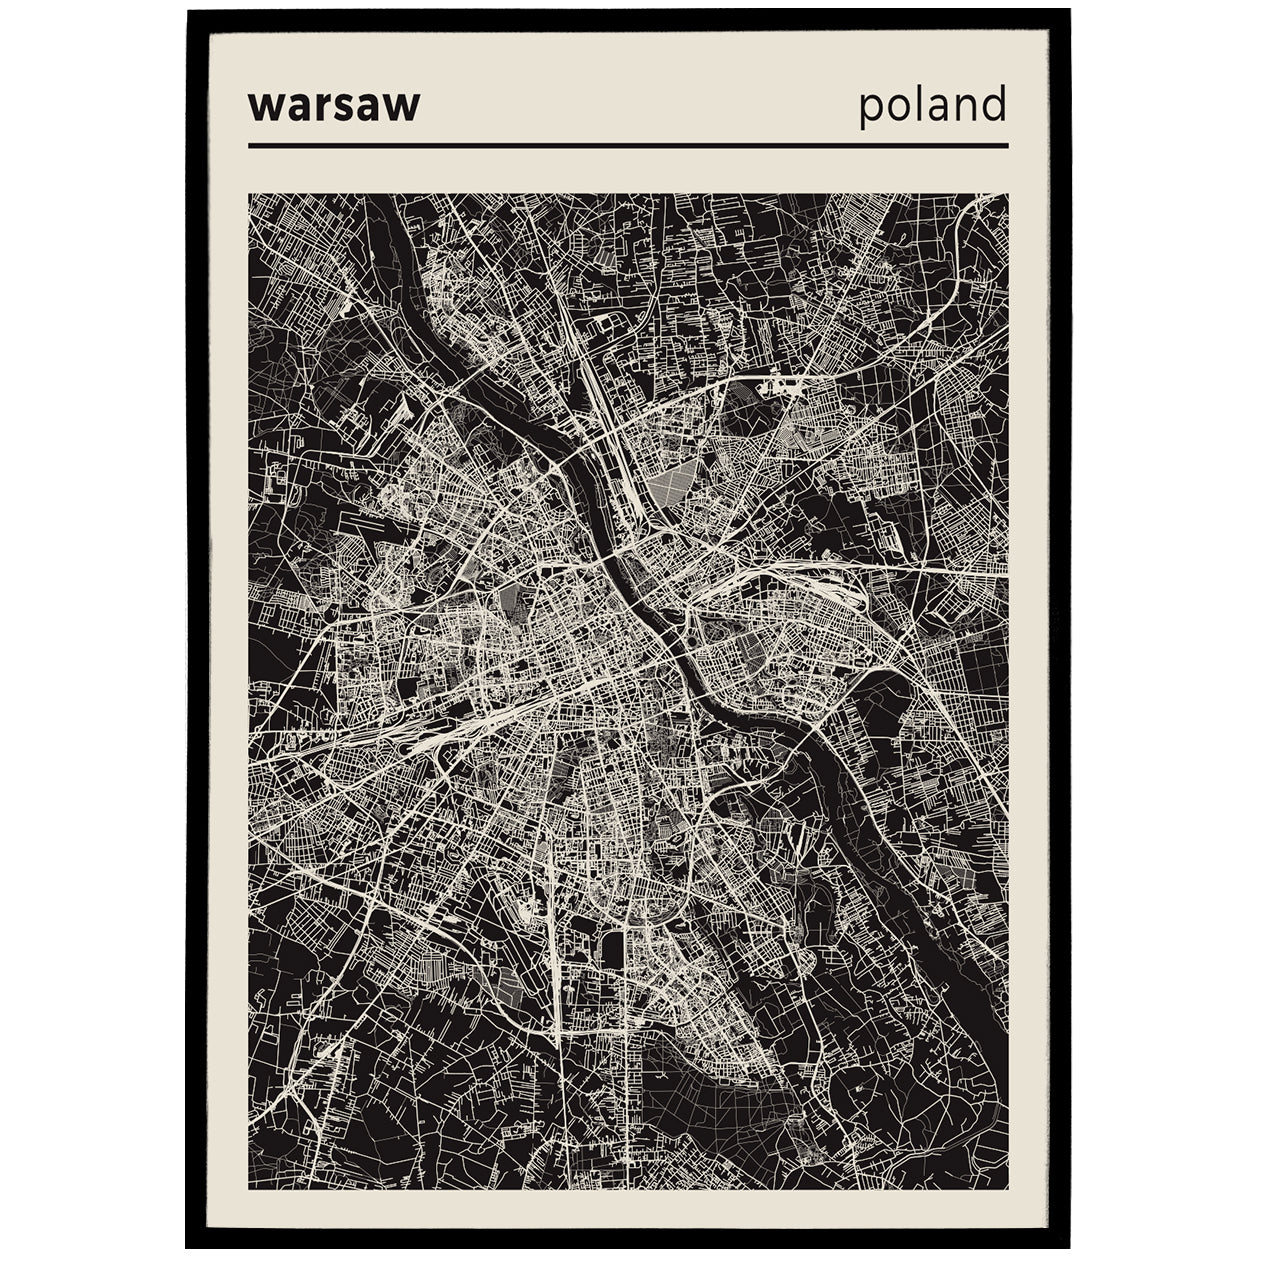 Warsaw Map Poster - Poland